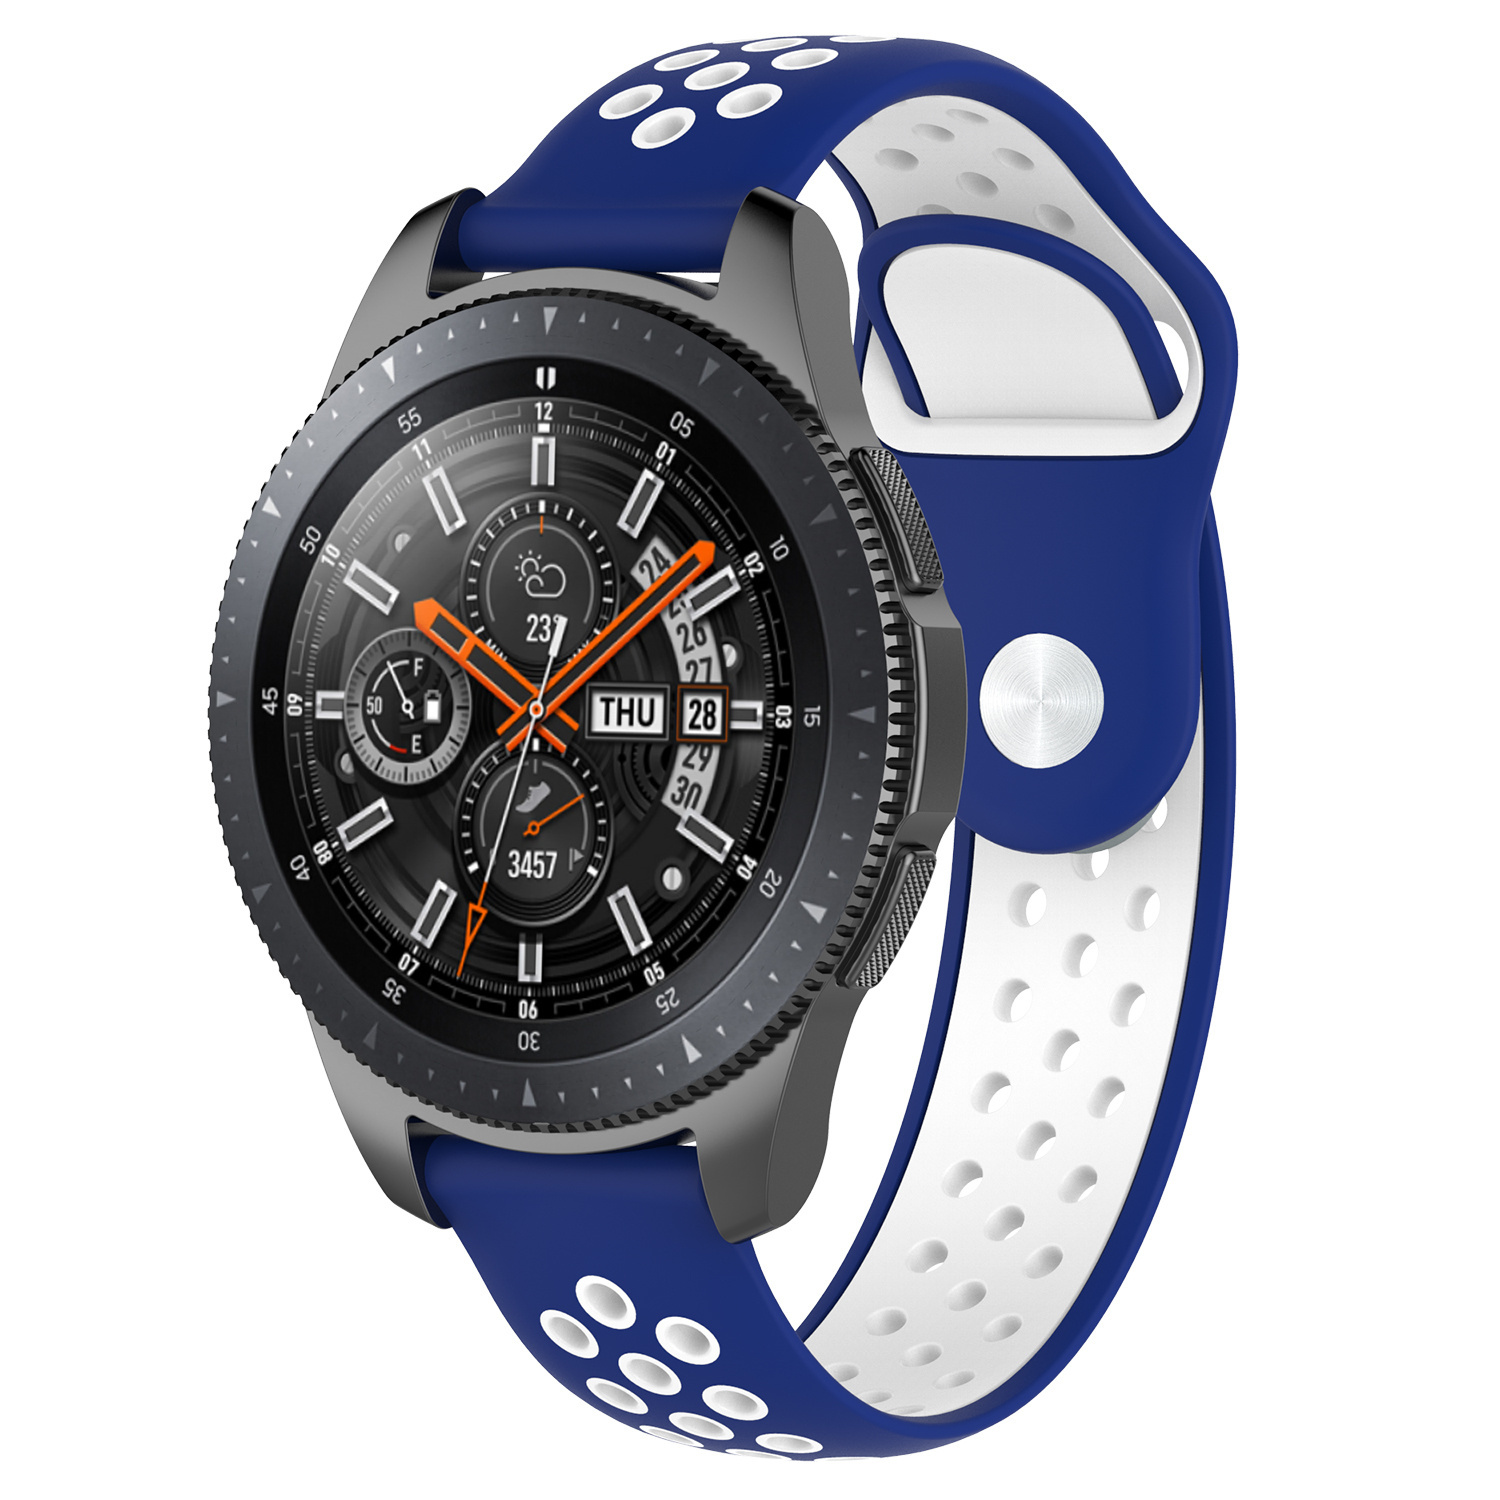 Huawei Watch GT dupla sport szalag - kék fehér